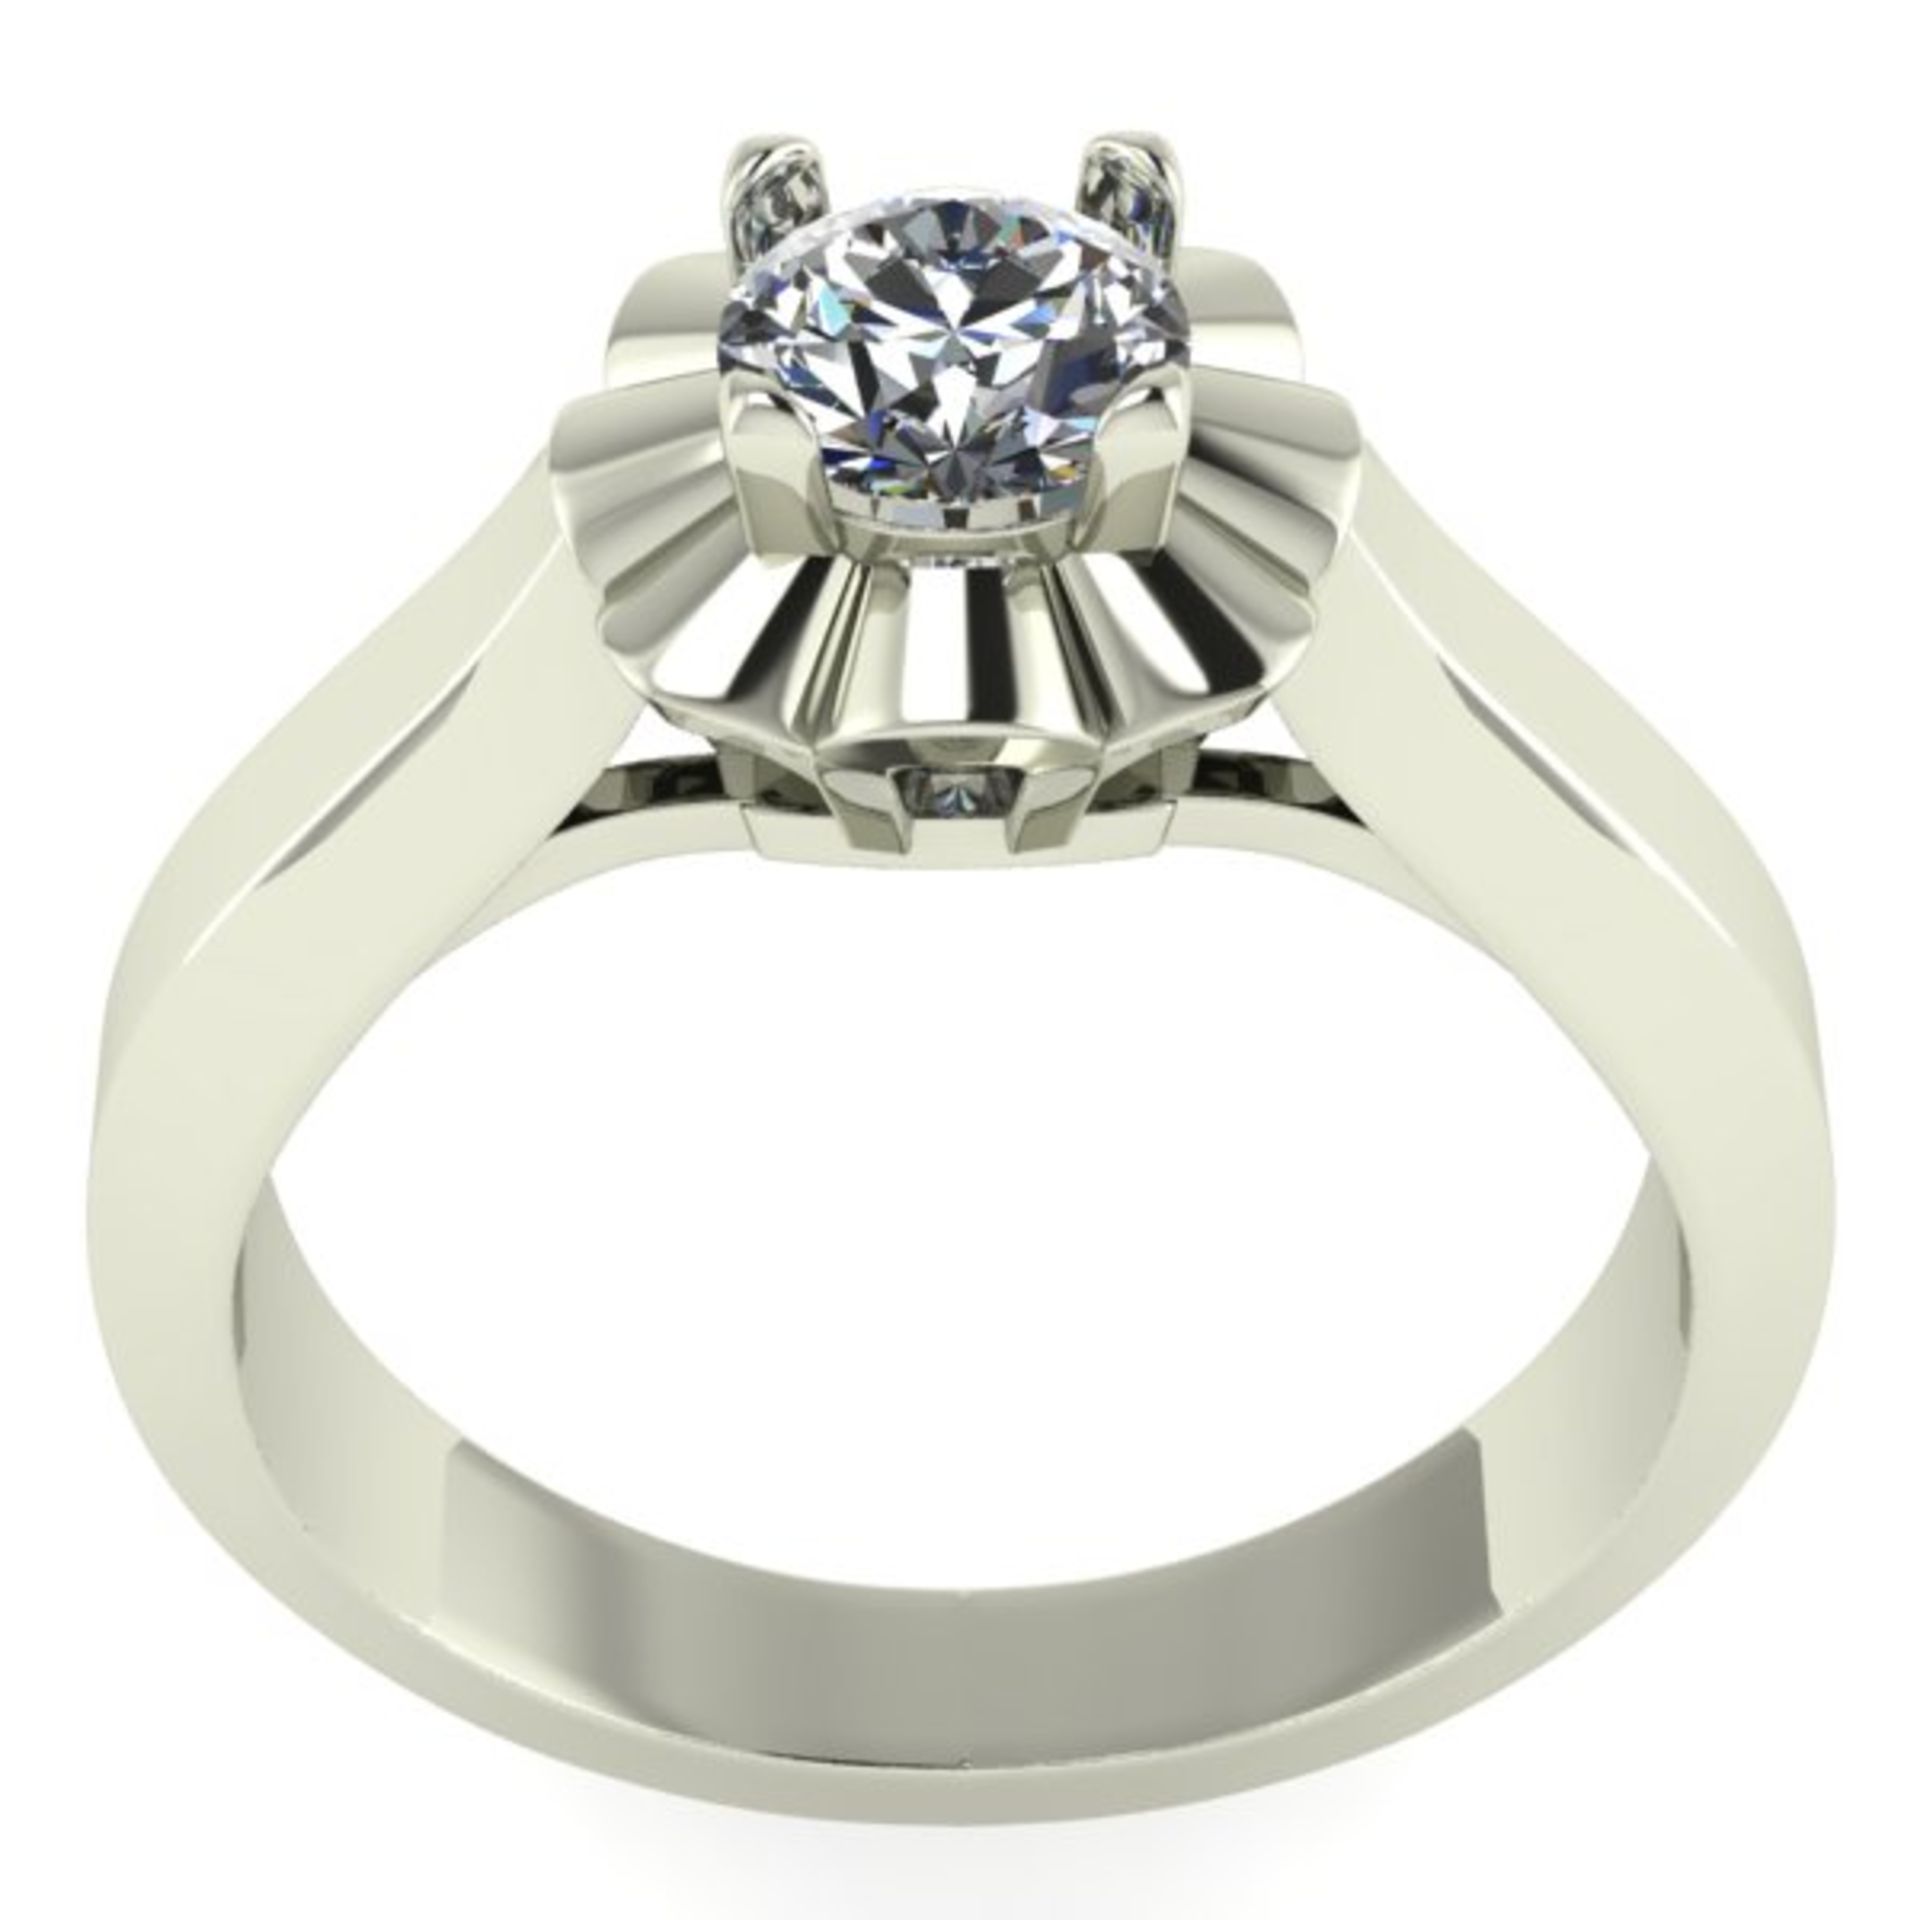 14 K / 585 White Gold Diamond Ring - Image 3 of 4